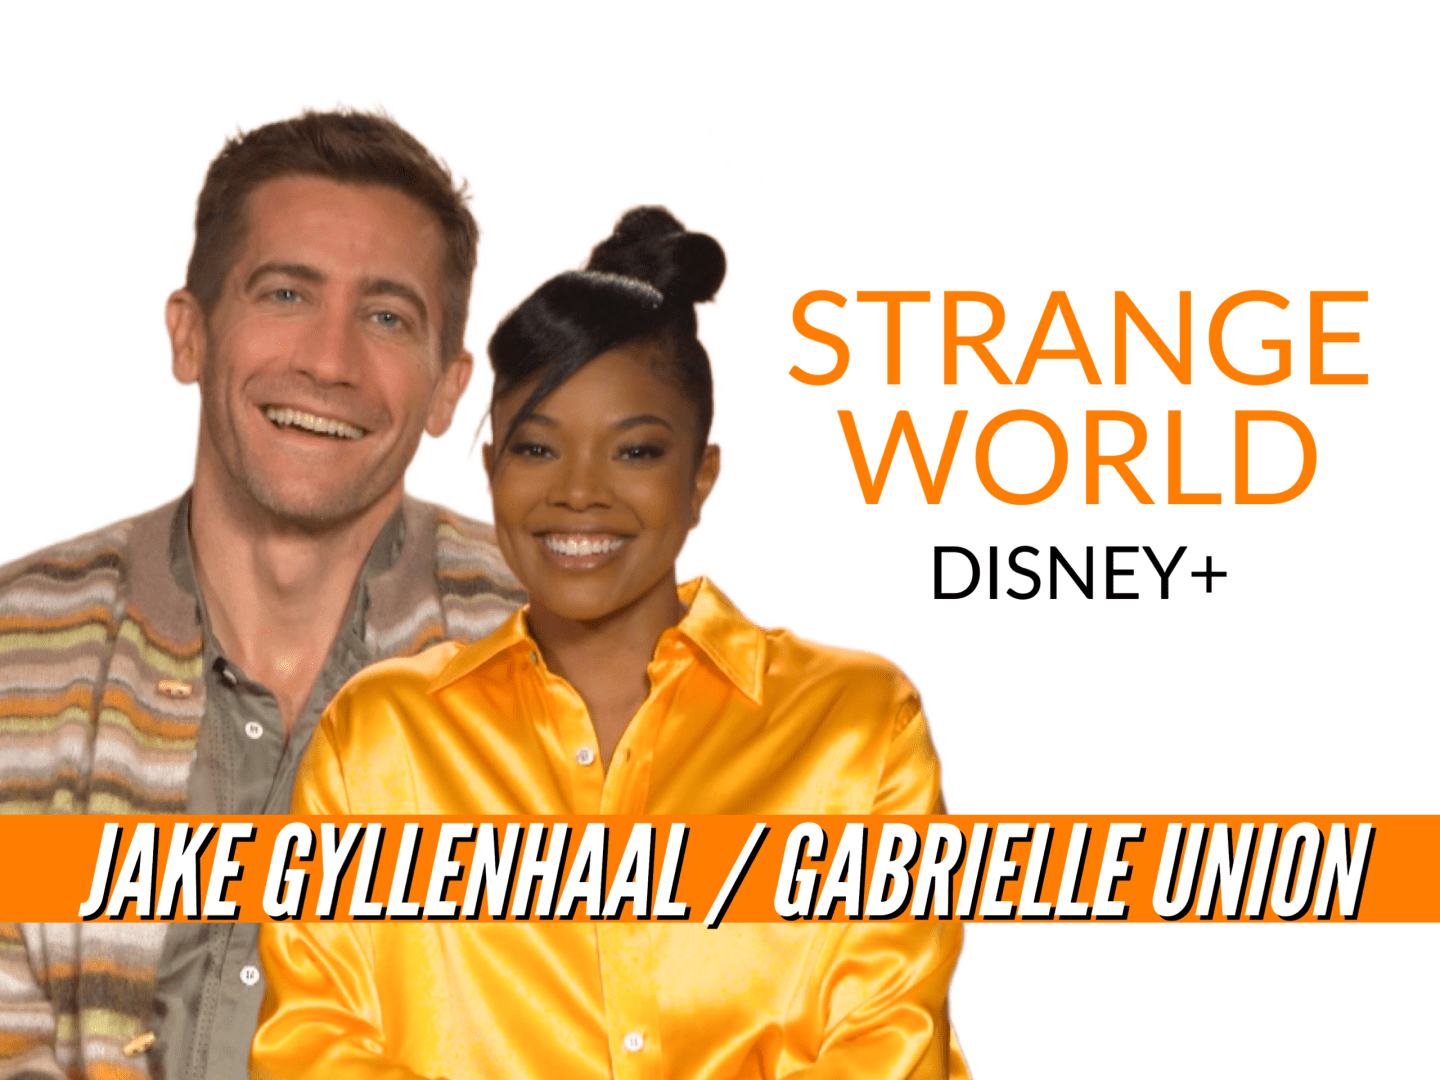 Jake Gyllenhaal and Gabrielle Union star in Disney's 'Strange World'